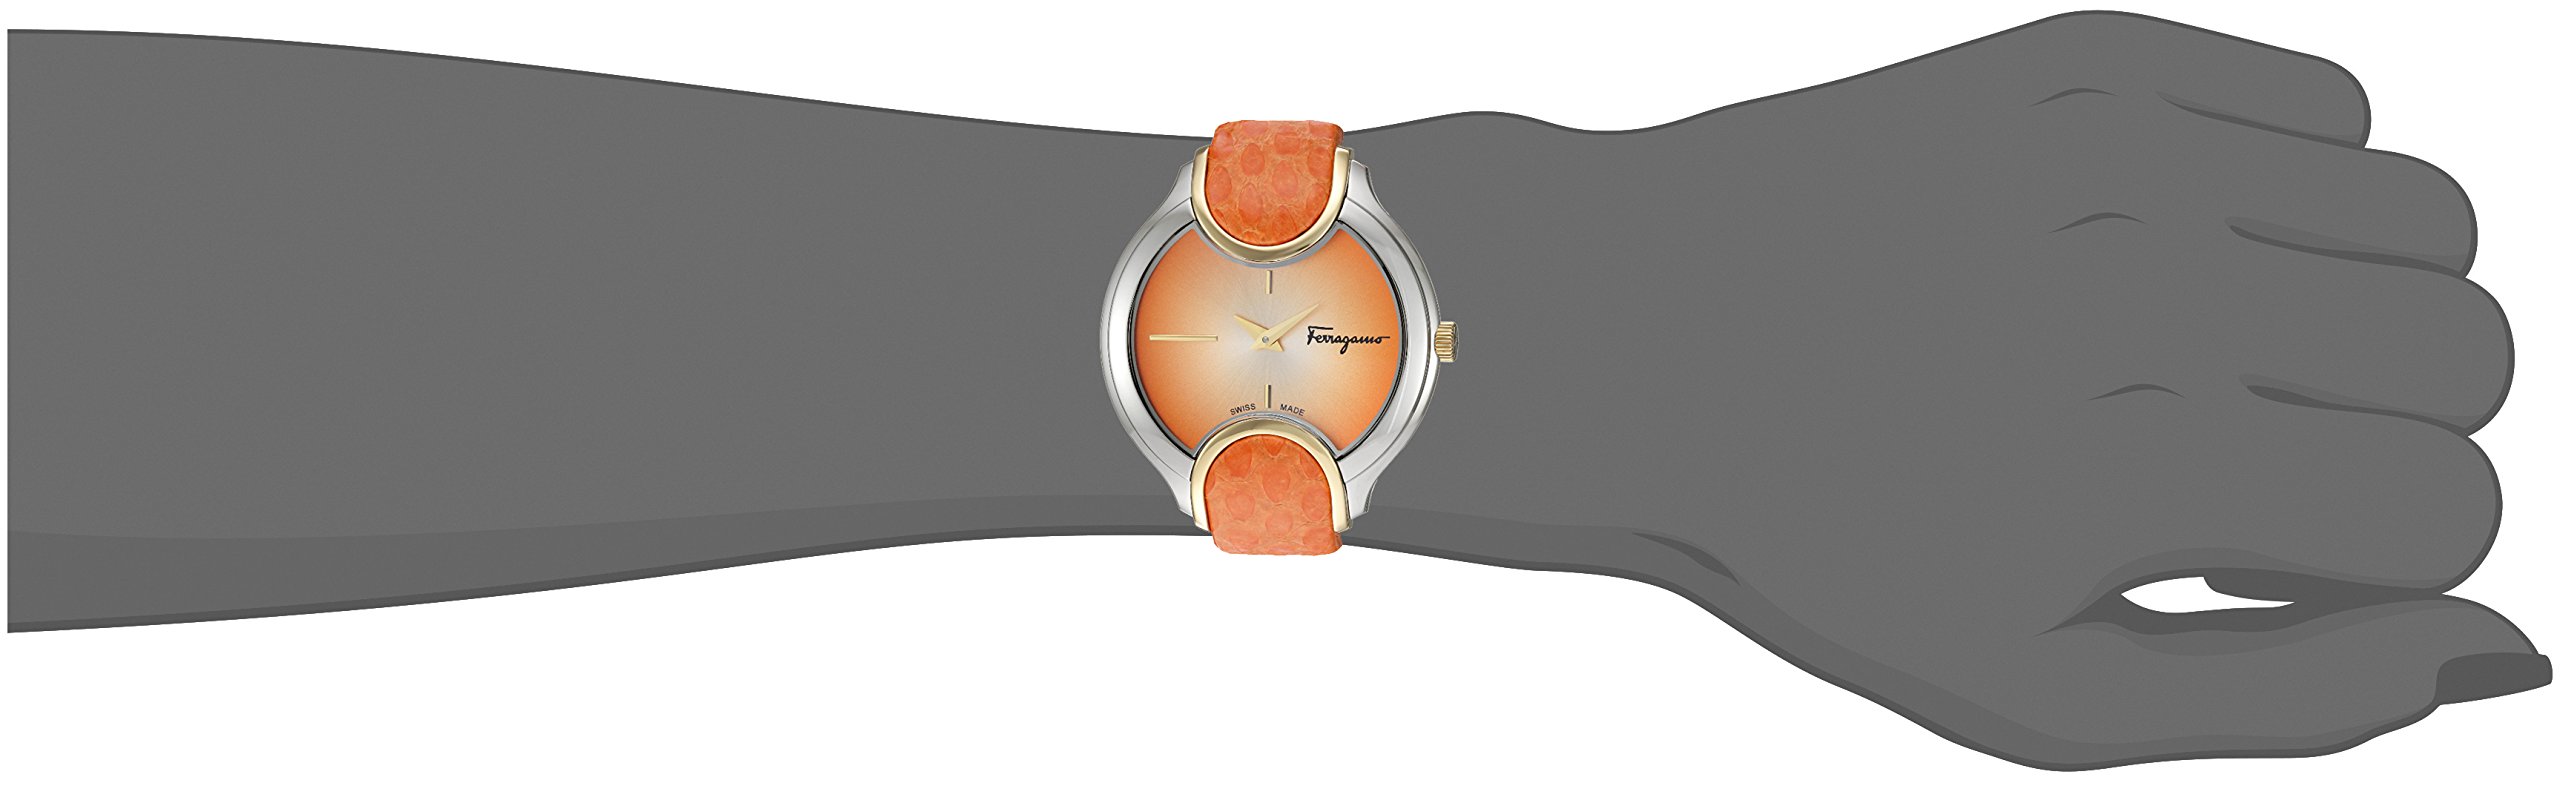 Salvatore Ferragamo Women's FIZ030015 Signature Analog Display Quartz Orange Watch